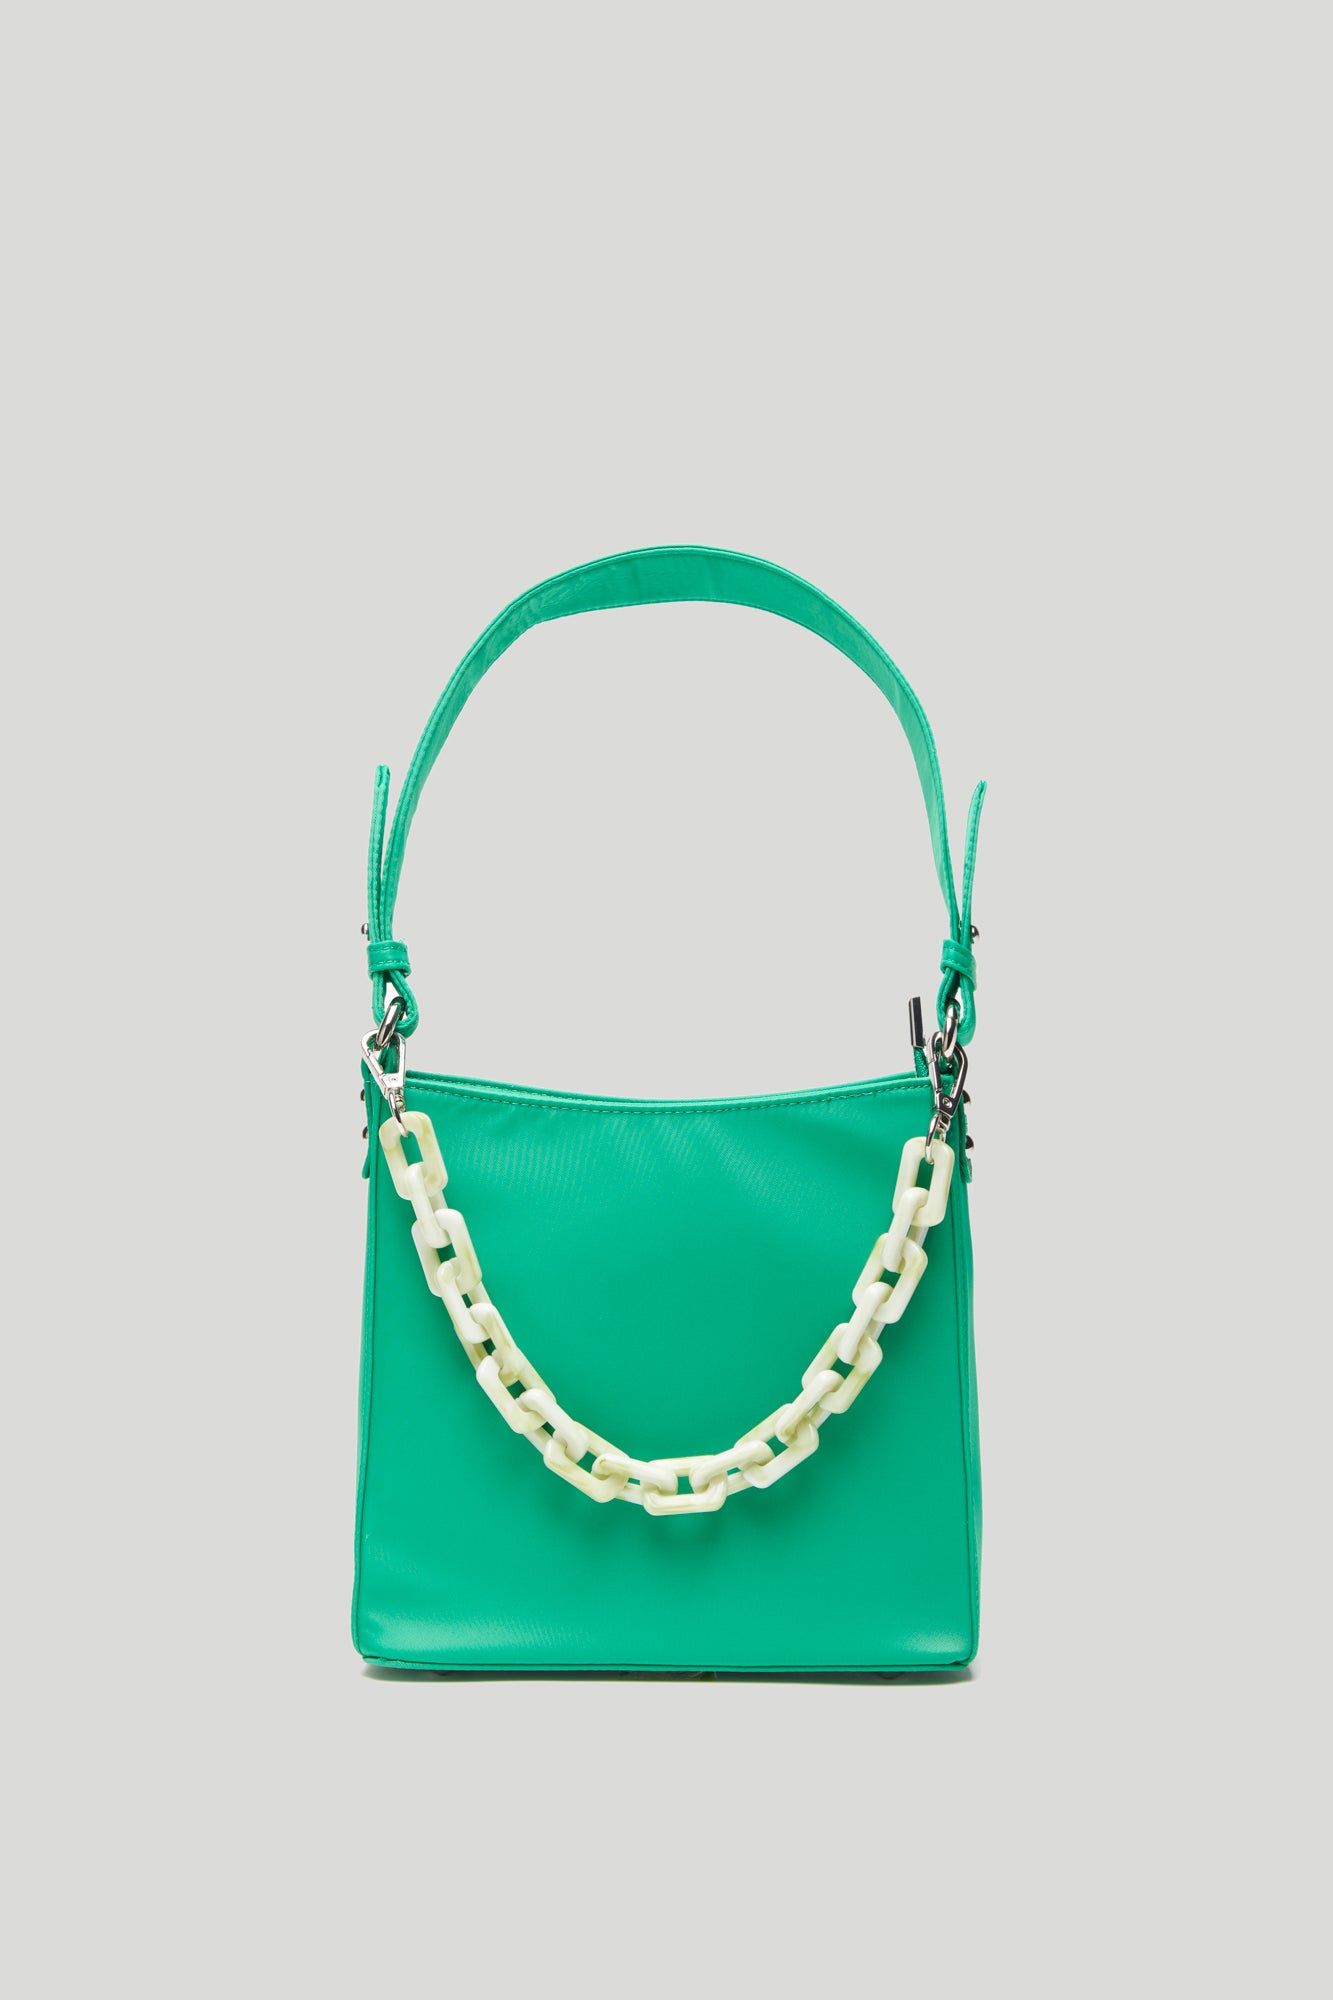 HVISK Amble Bag in Green Recycled Nylon